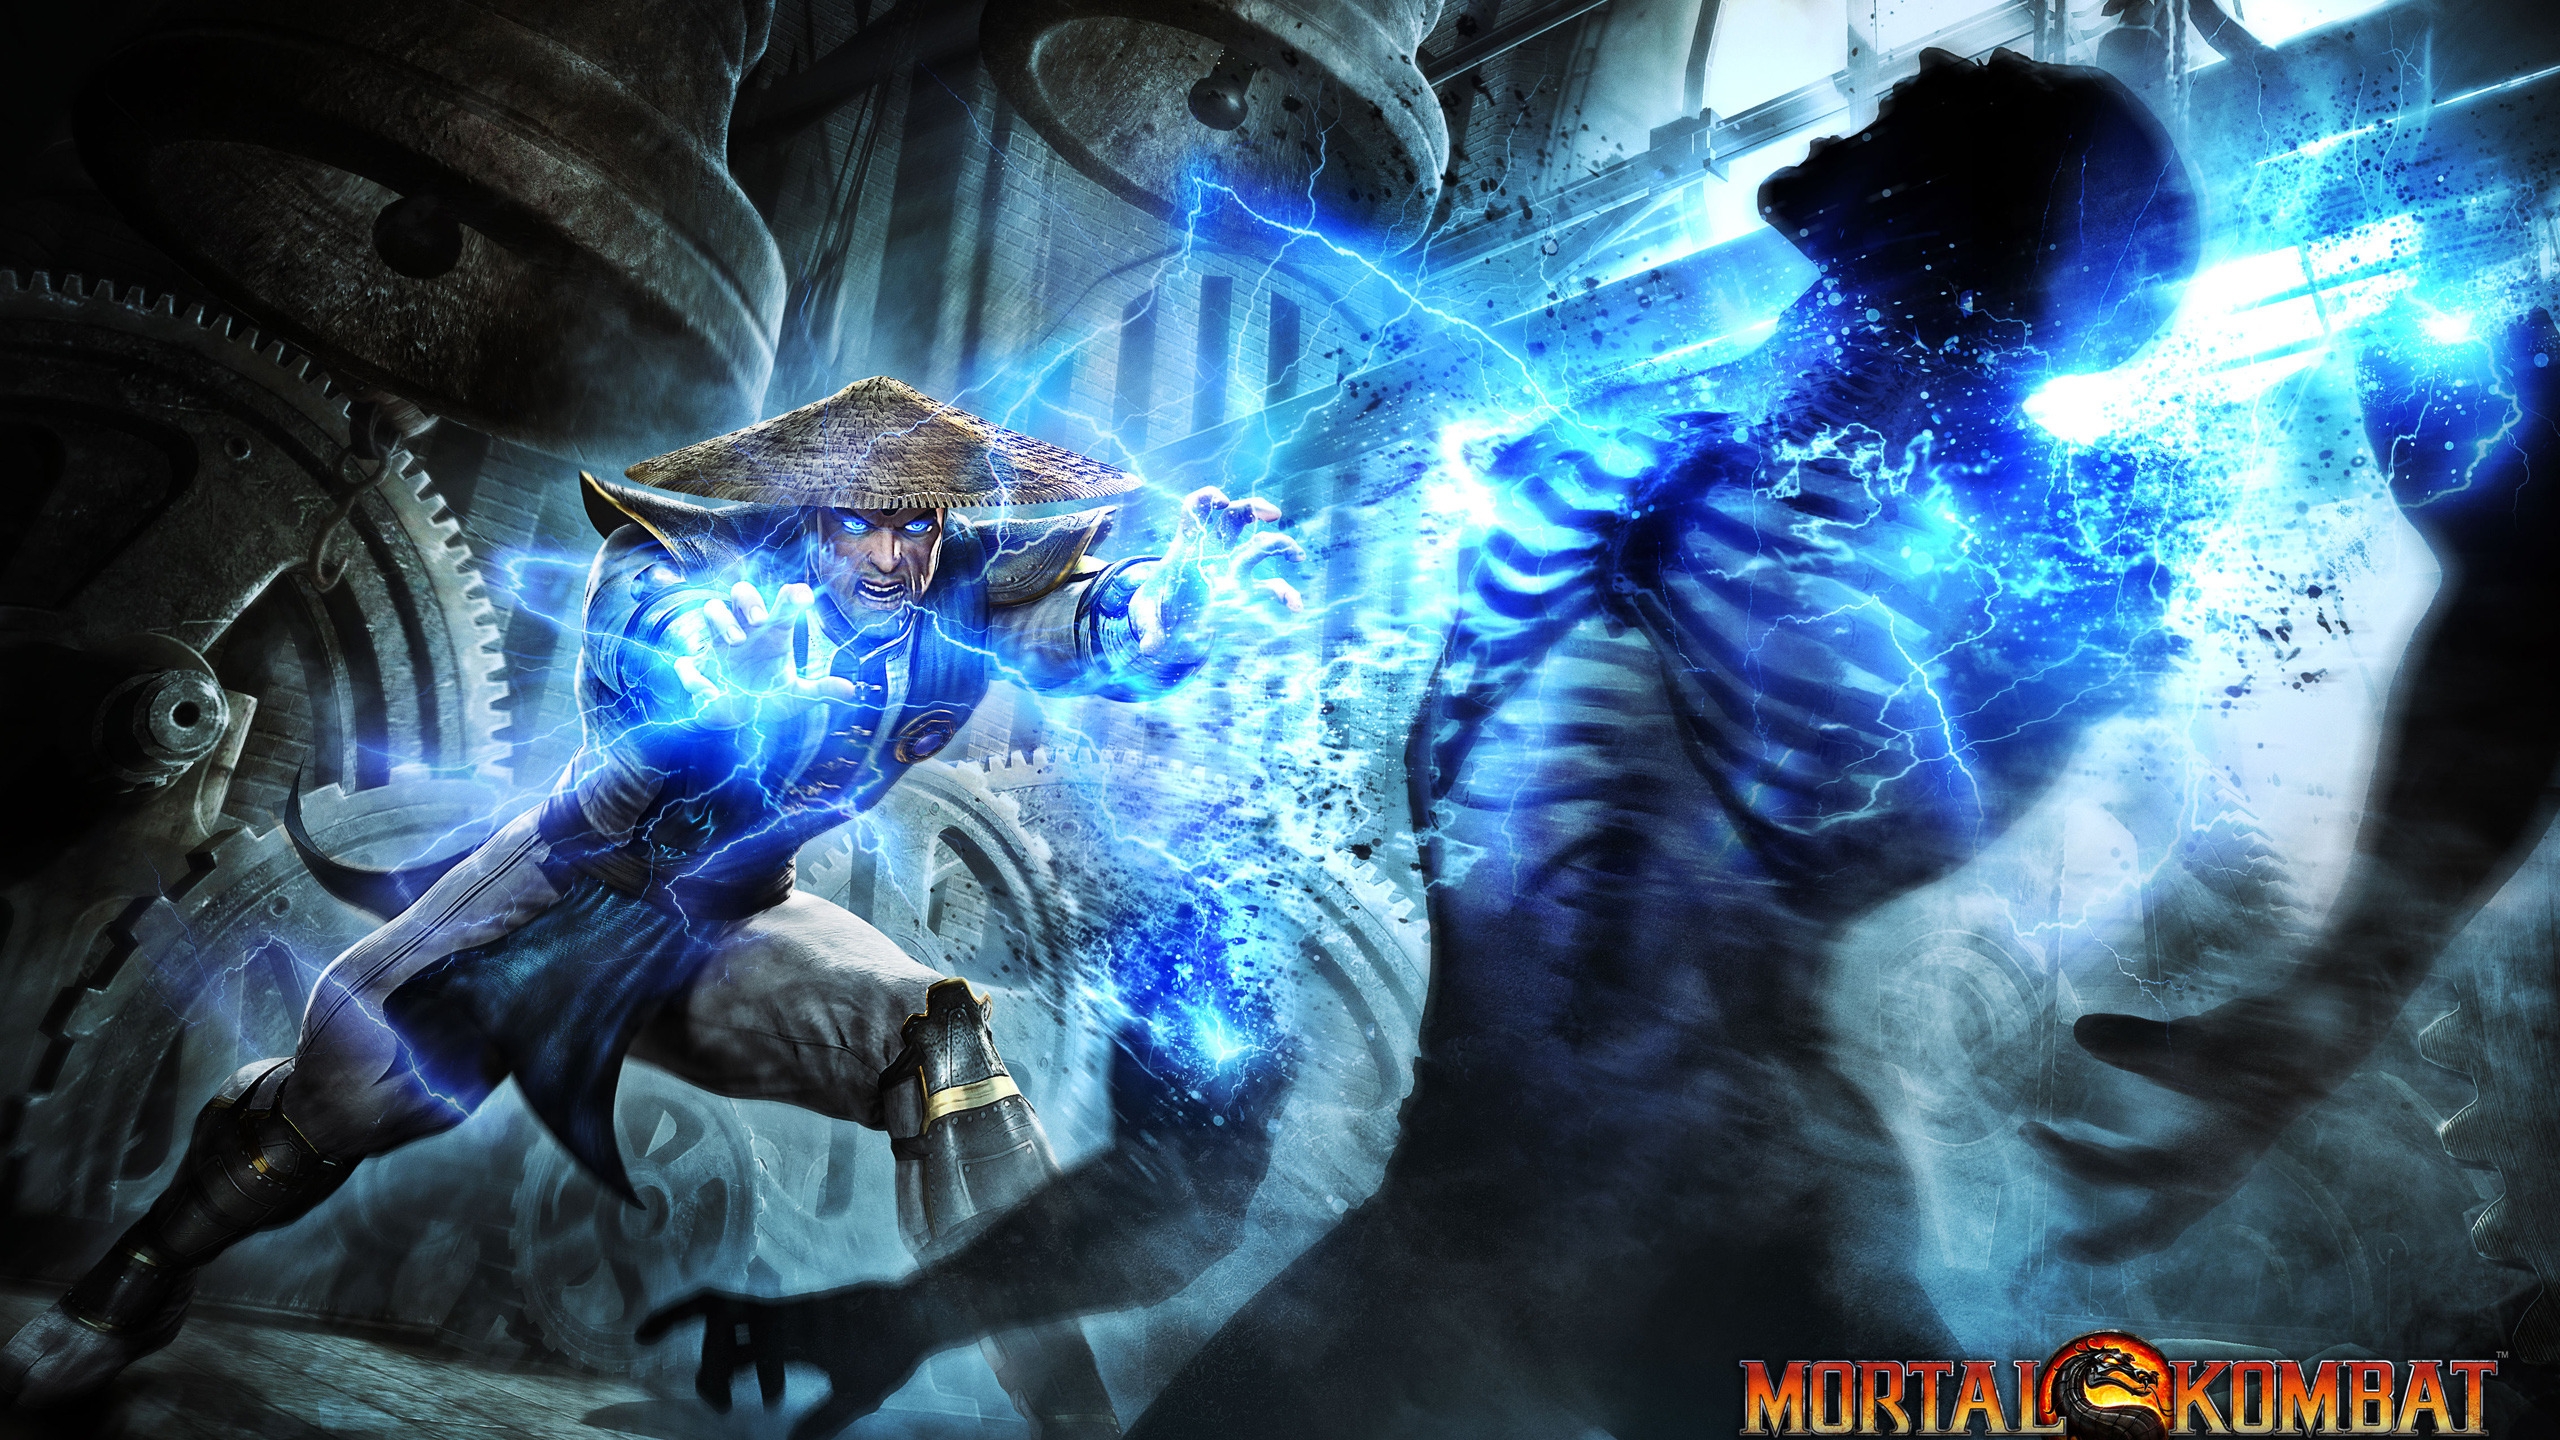 Mortal Kombat Raiden for 2560x1440 HDTV resolution